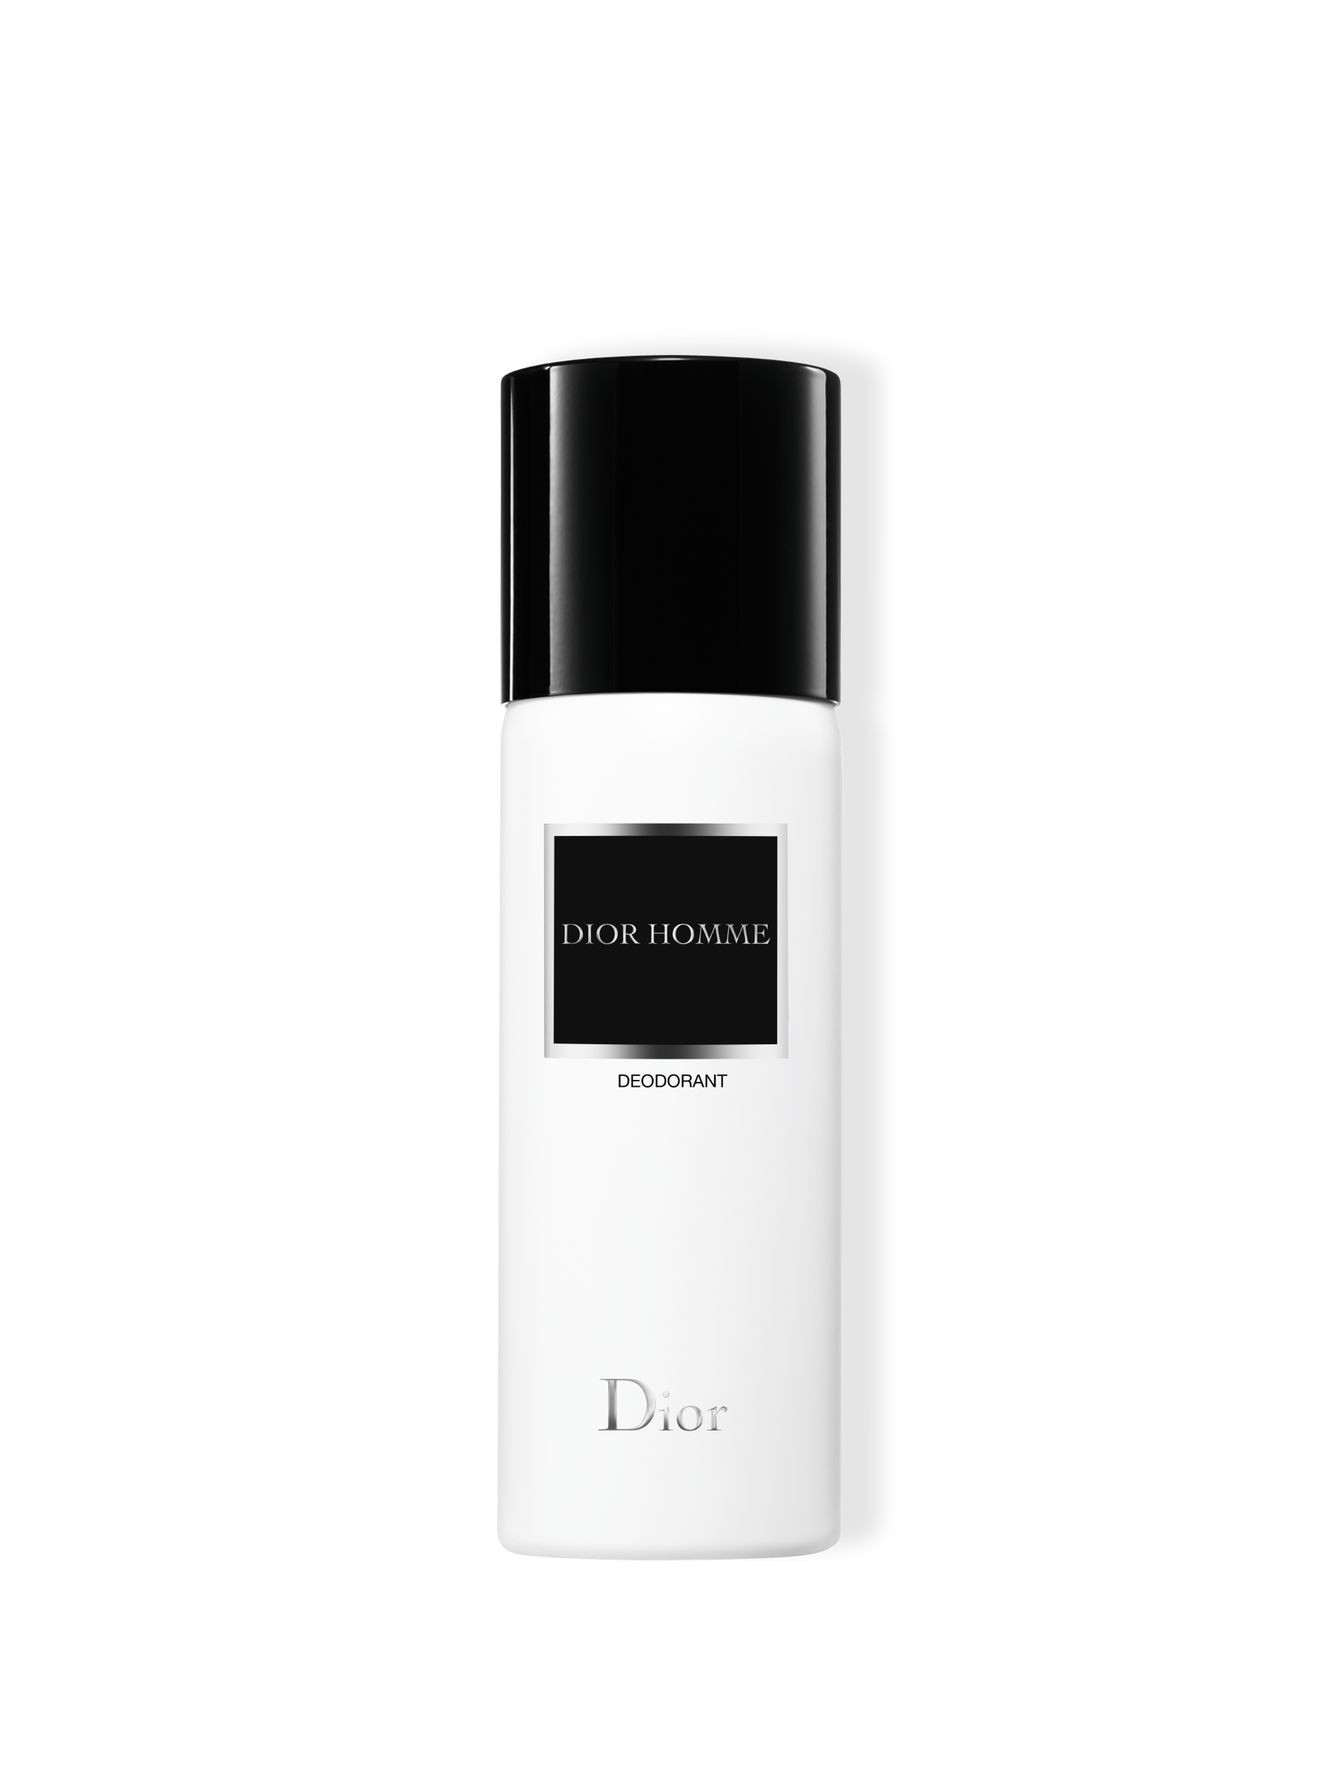 Dior Homme Дезодорант-спрей 150 мл - Общий вид